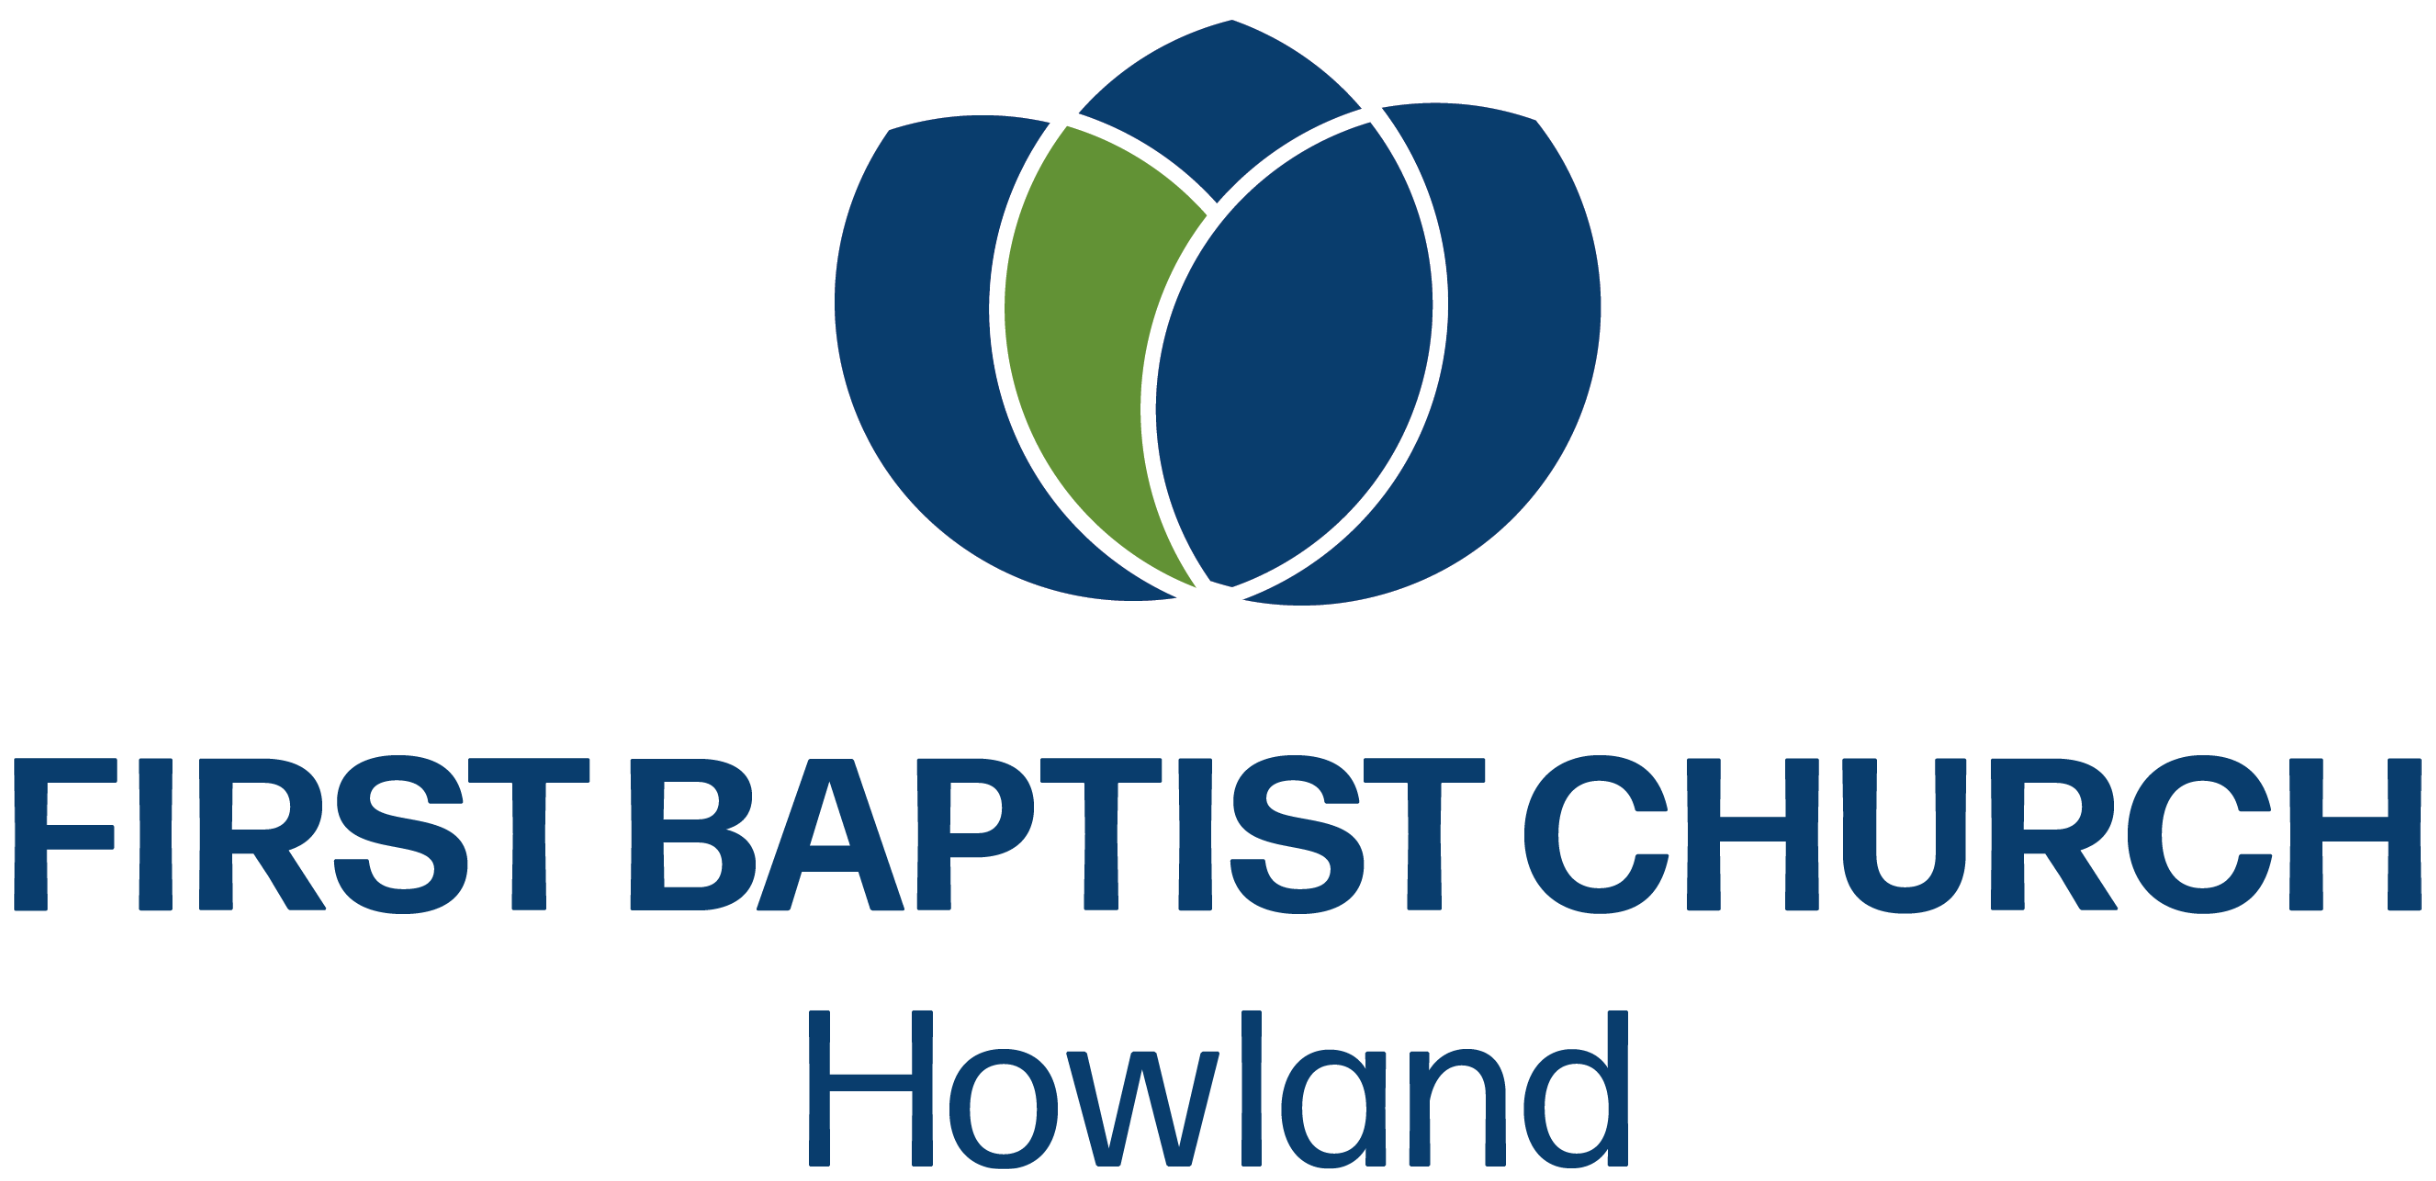 First Baptist Church of Howland